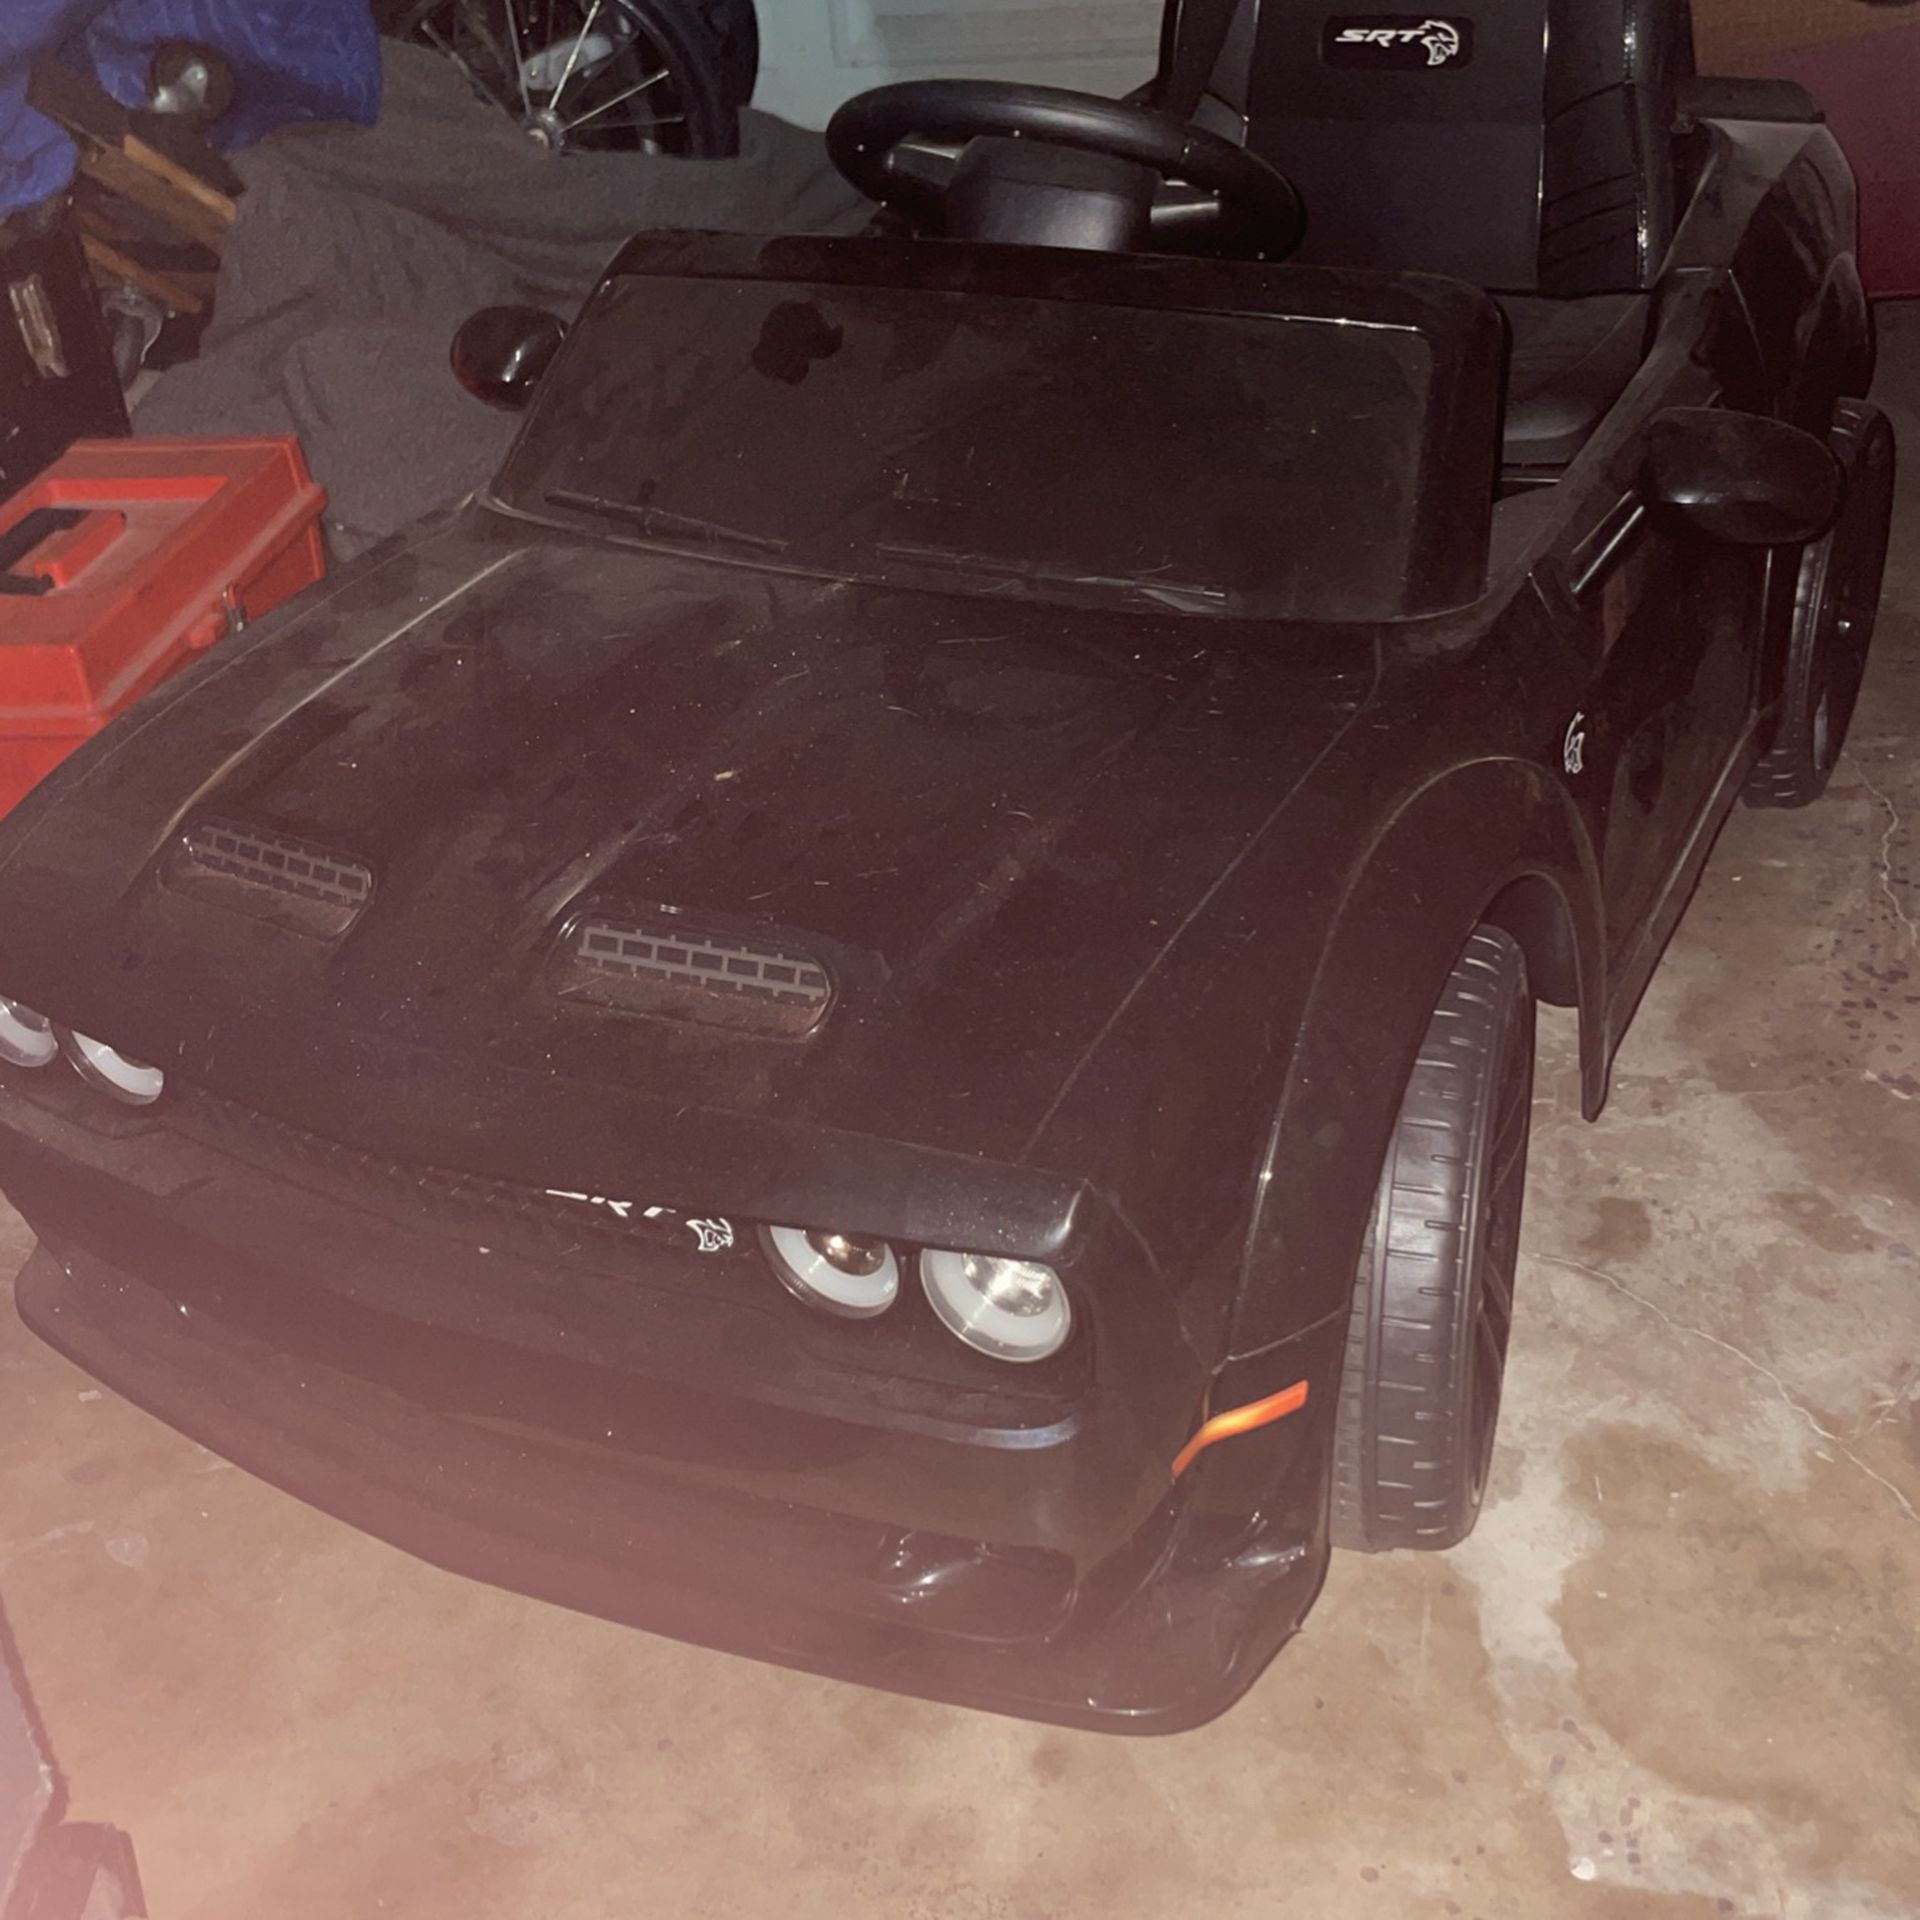 Power Wheel Dodge Hellcat Challenger Electronic Car For Kids